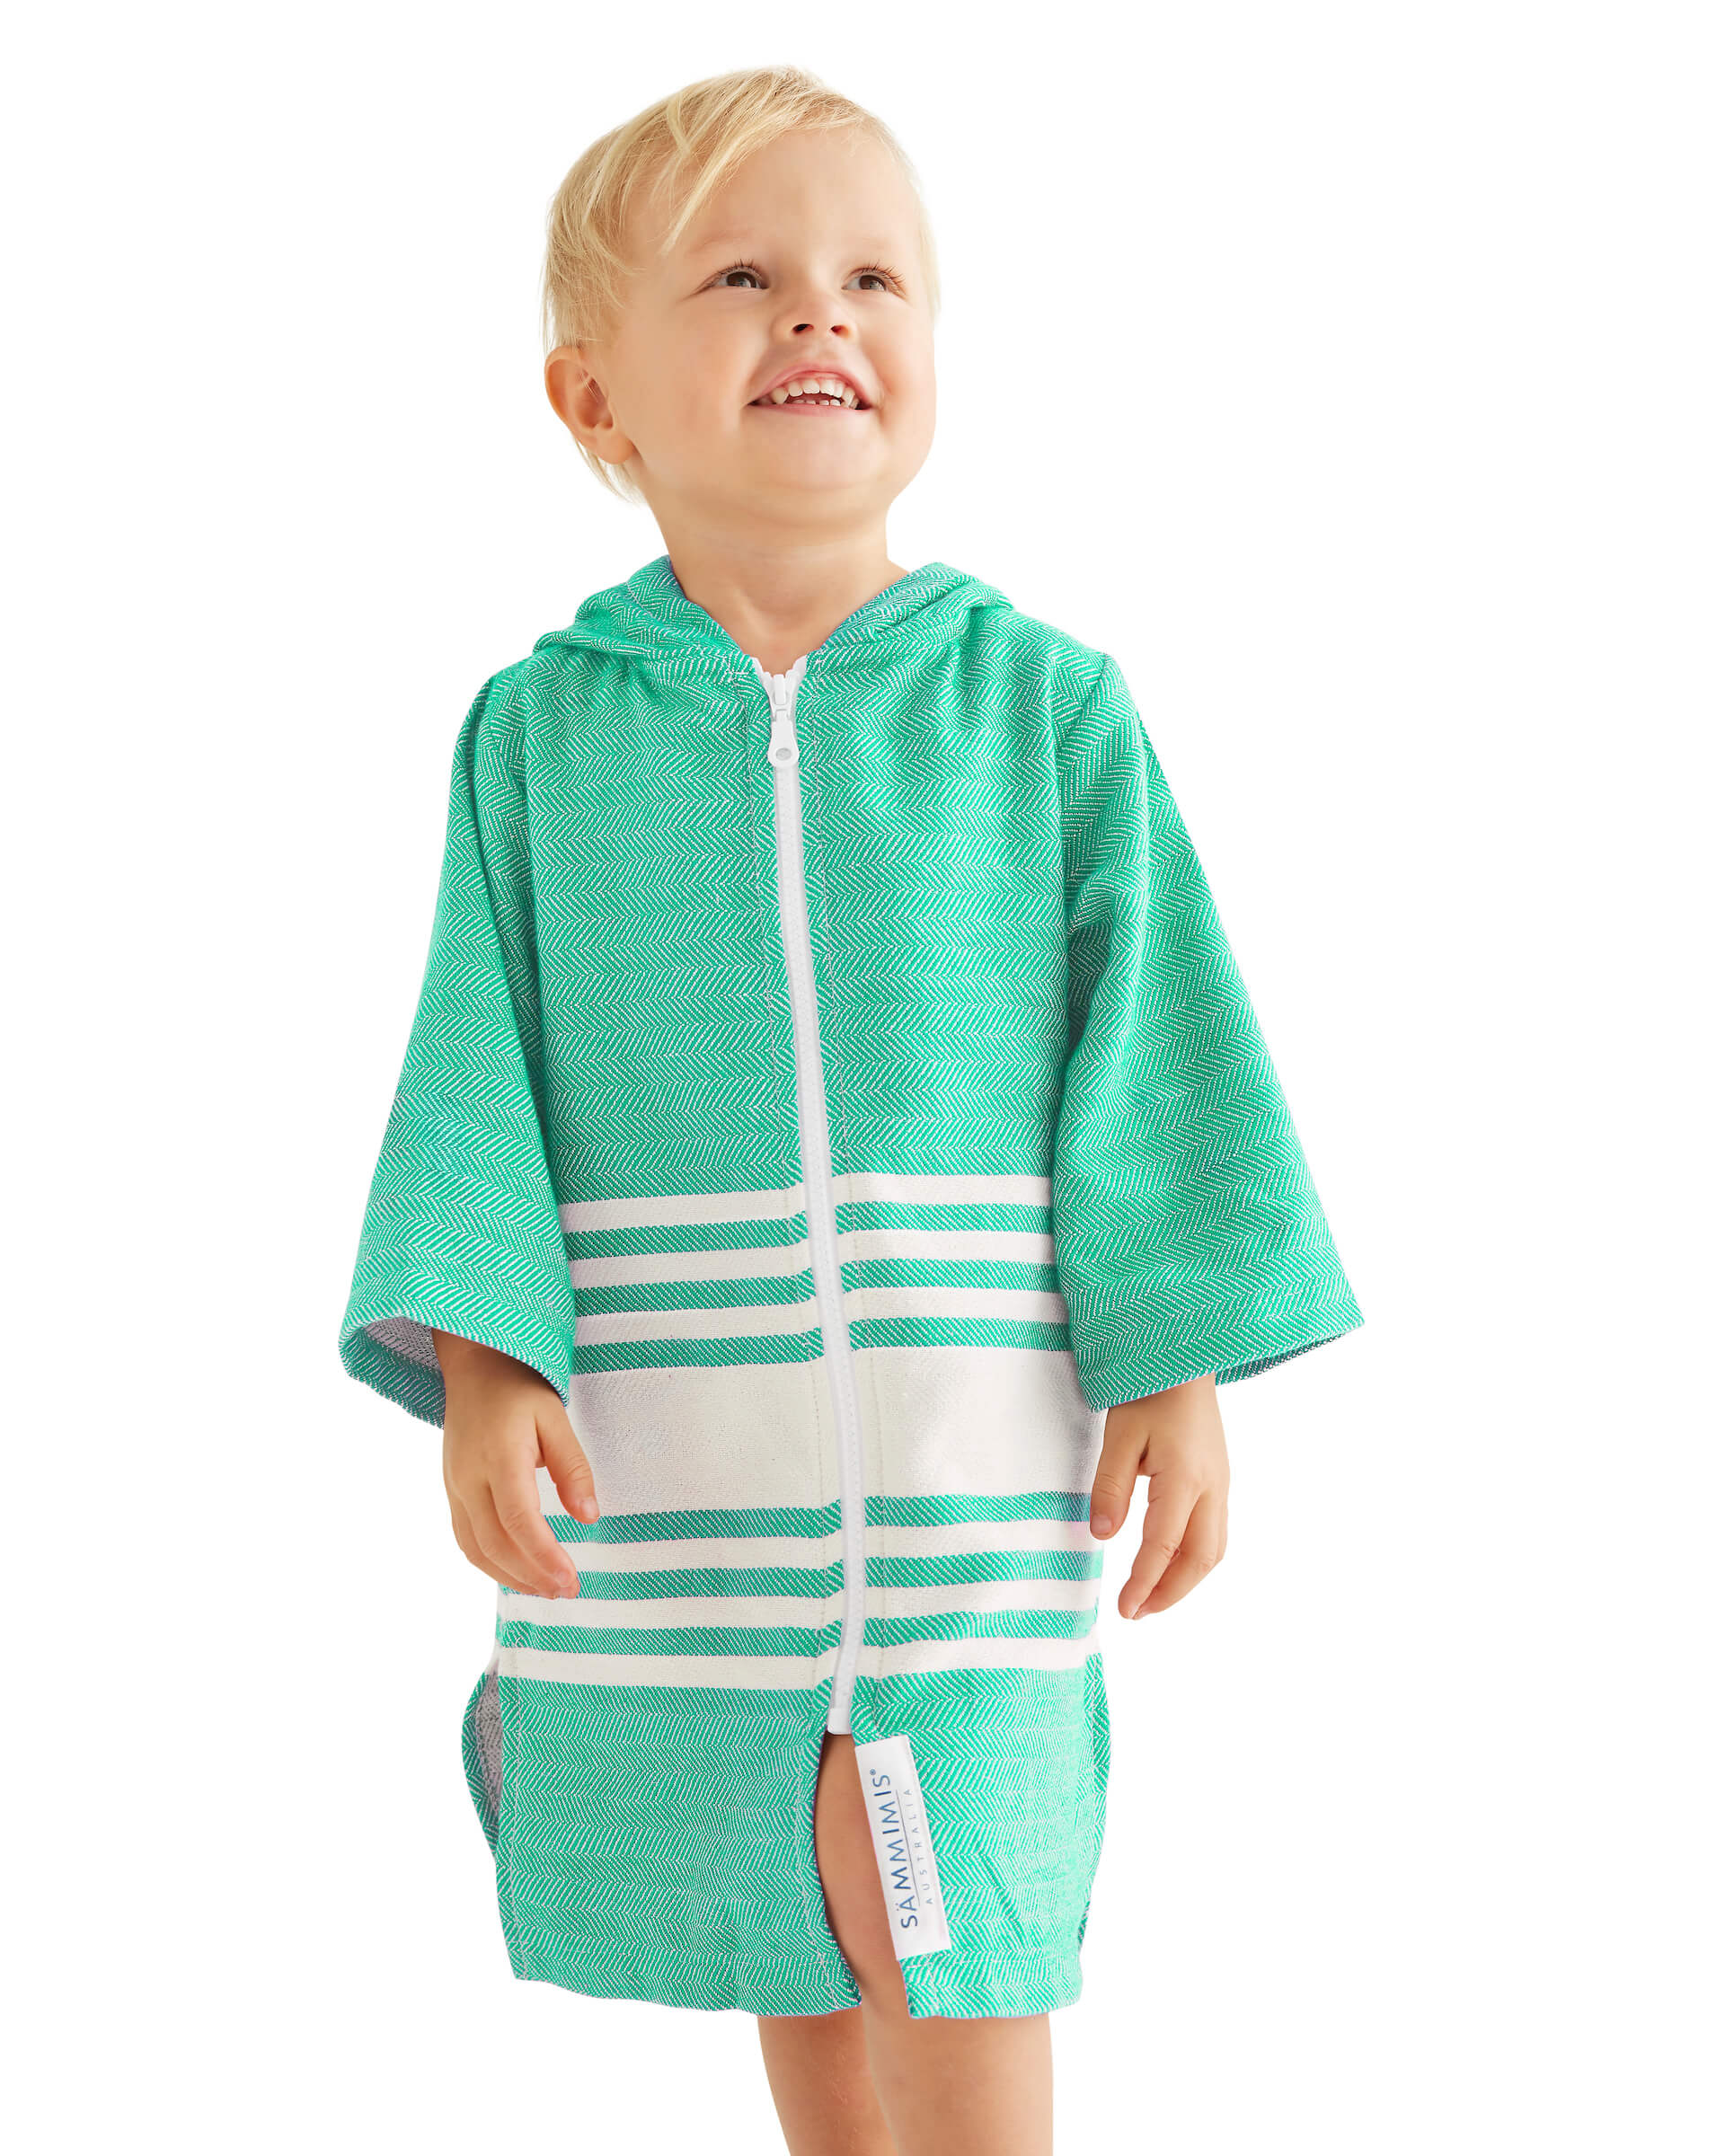 TASSOS Baby Hooded Towel: Sea Green/White